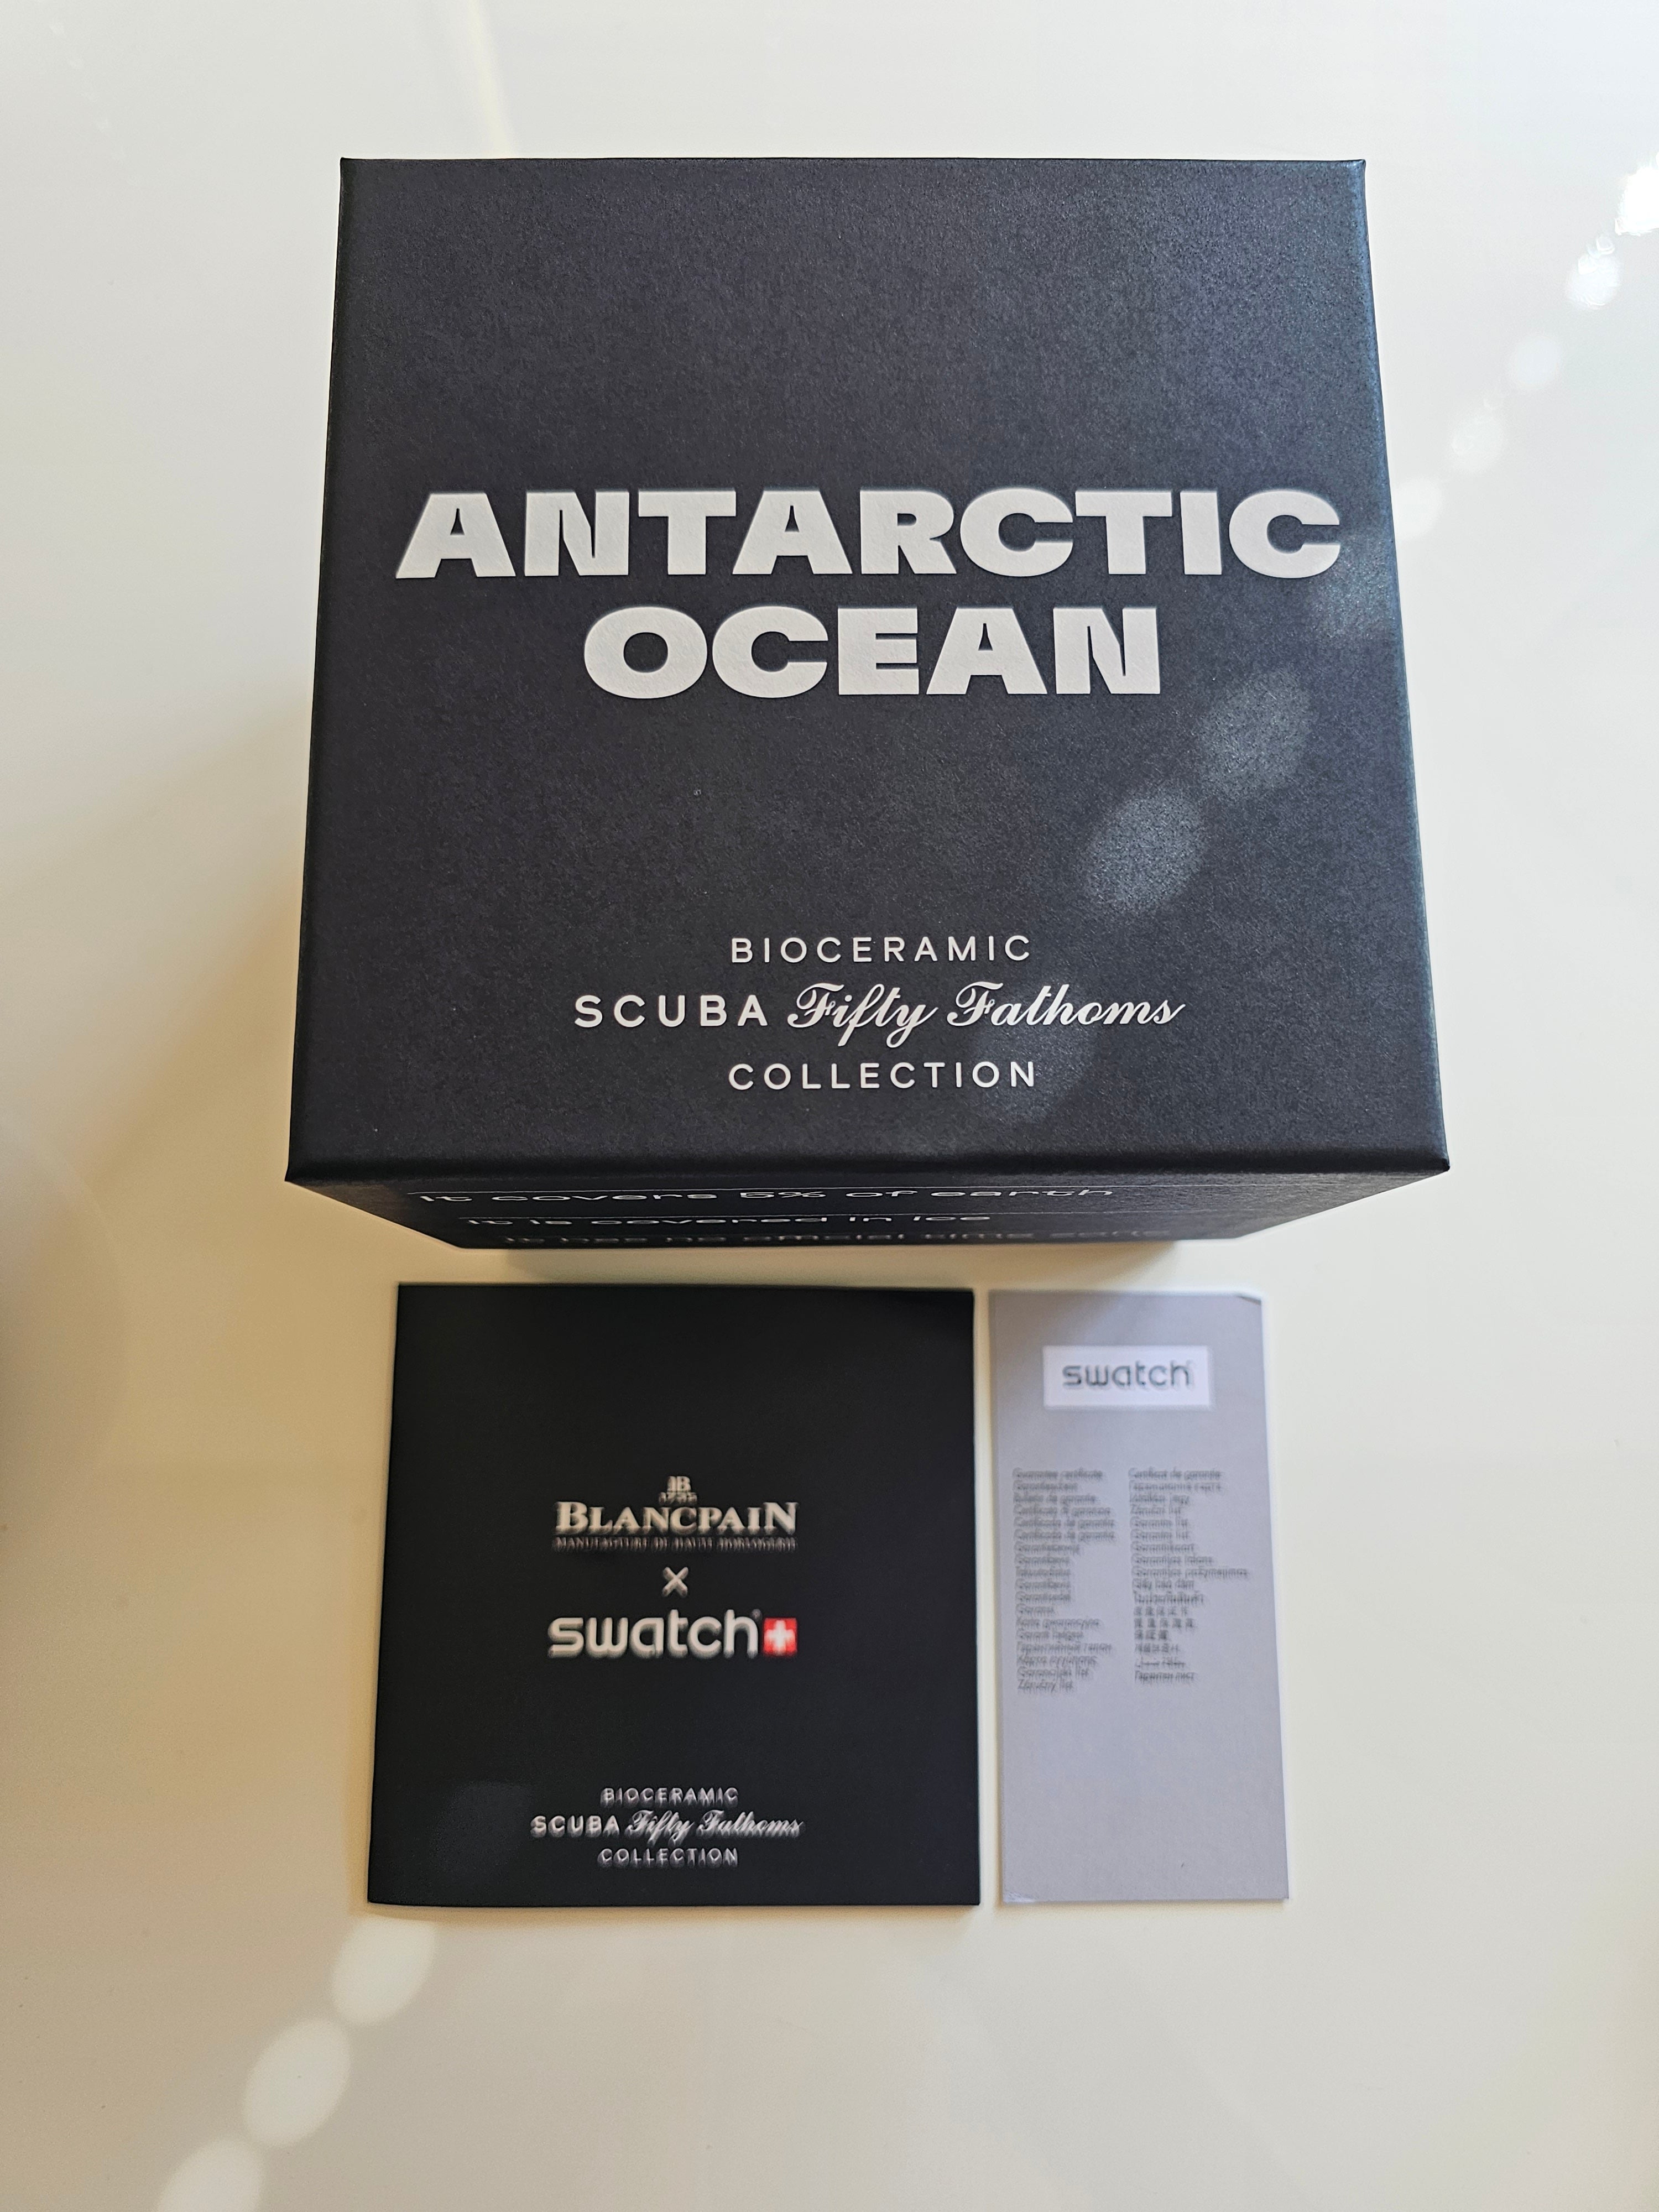 Swatch x Blancpain   Fifty Fathoms Scuba   Bioceramic   Antarctic